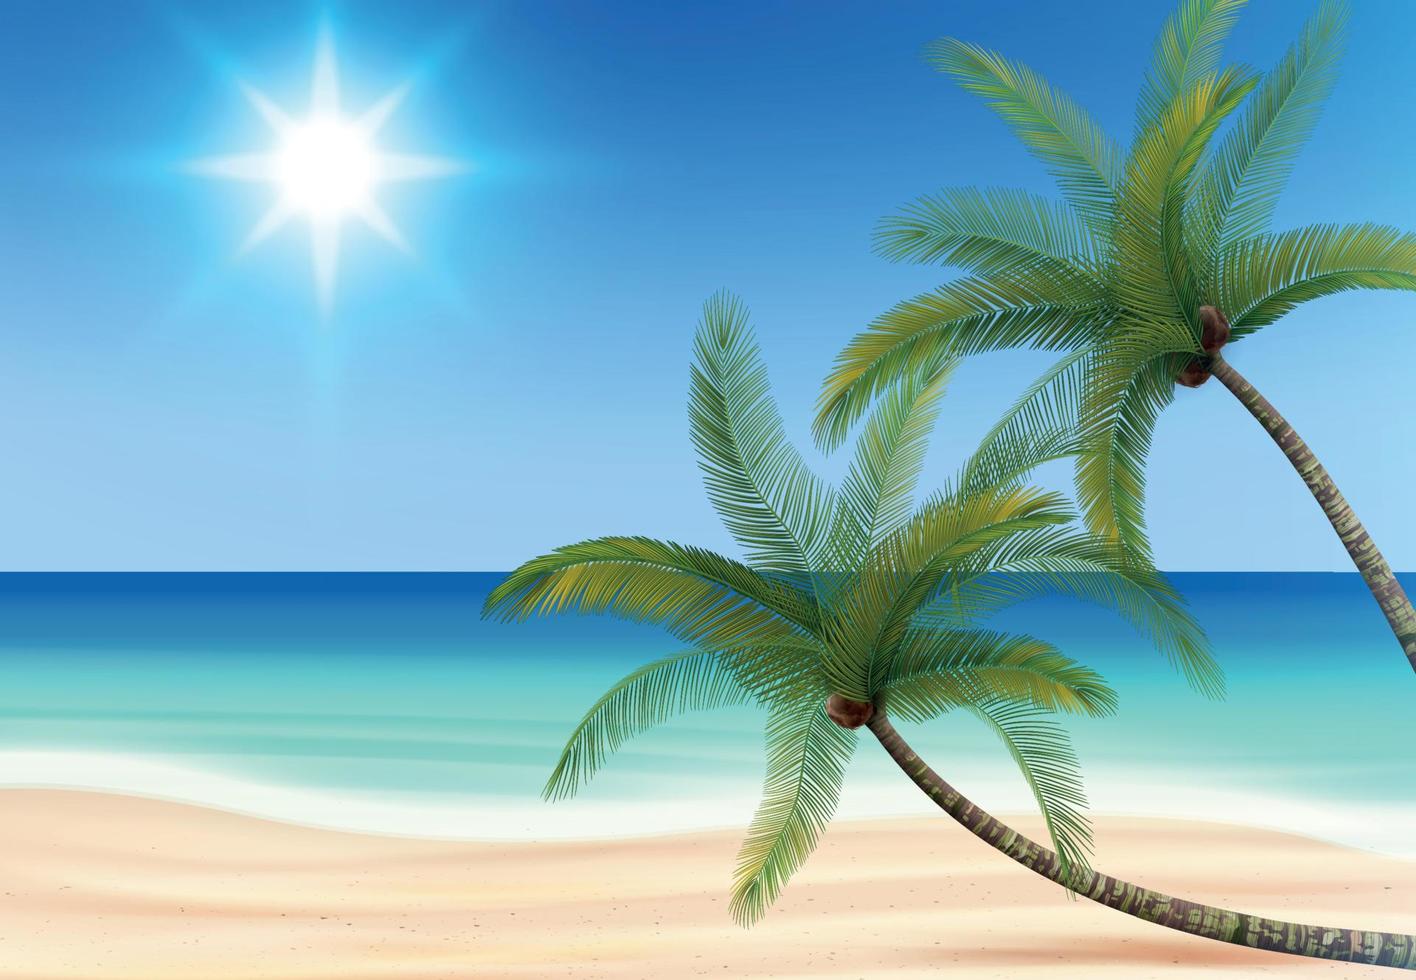 Beach Daylight Palms Composition vector